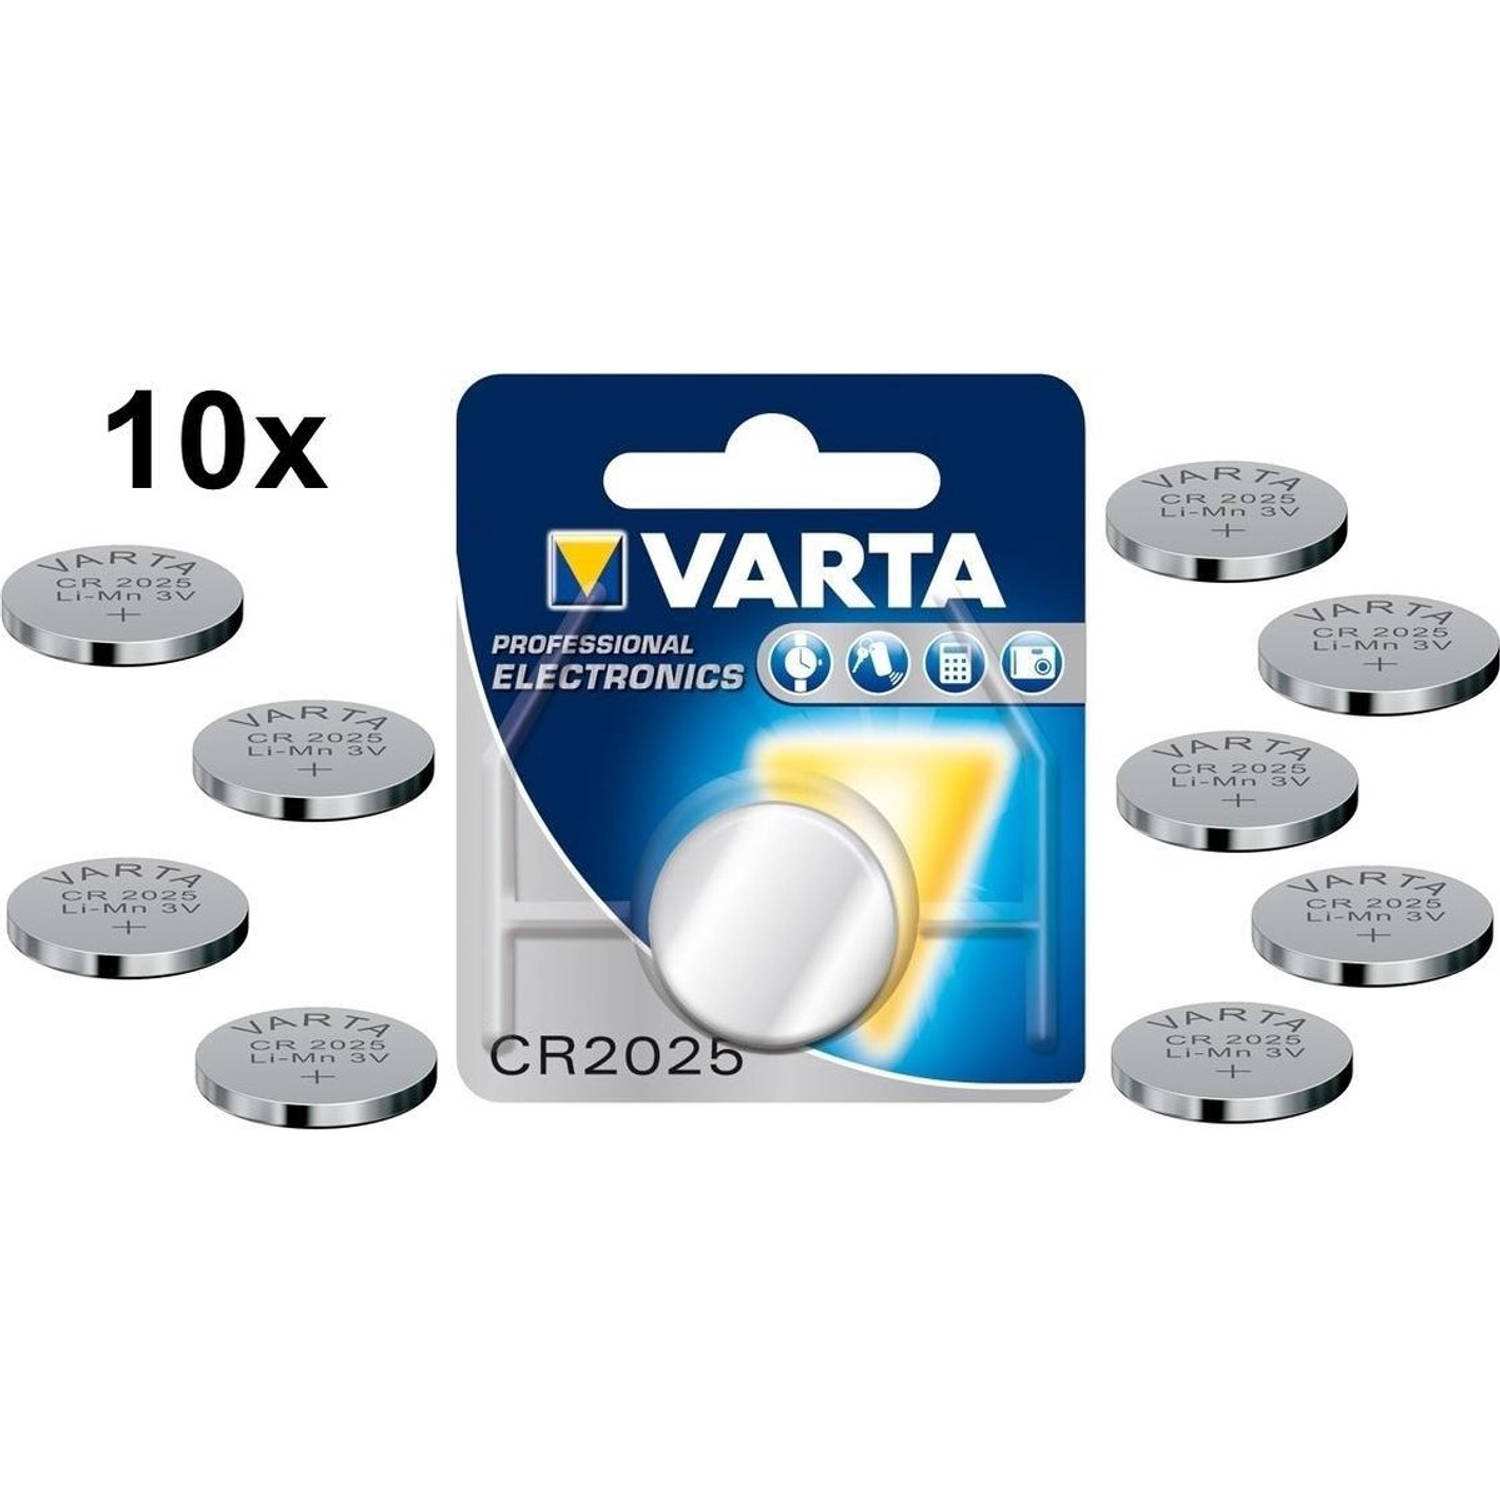 Varta Professional Electronics CR2025 6025 3V 170mAh knoopcel batterij - 10 stuks